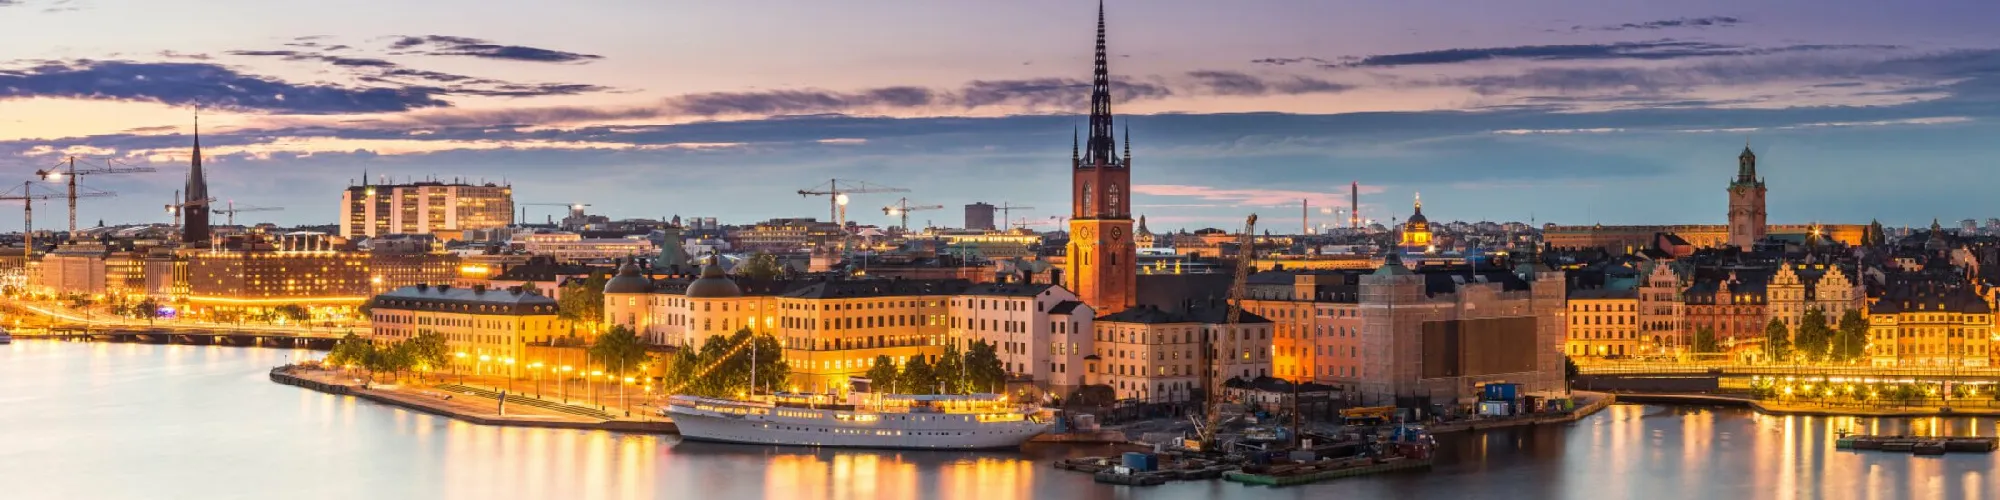 Hotels in Schweden background image